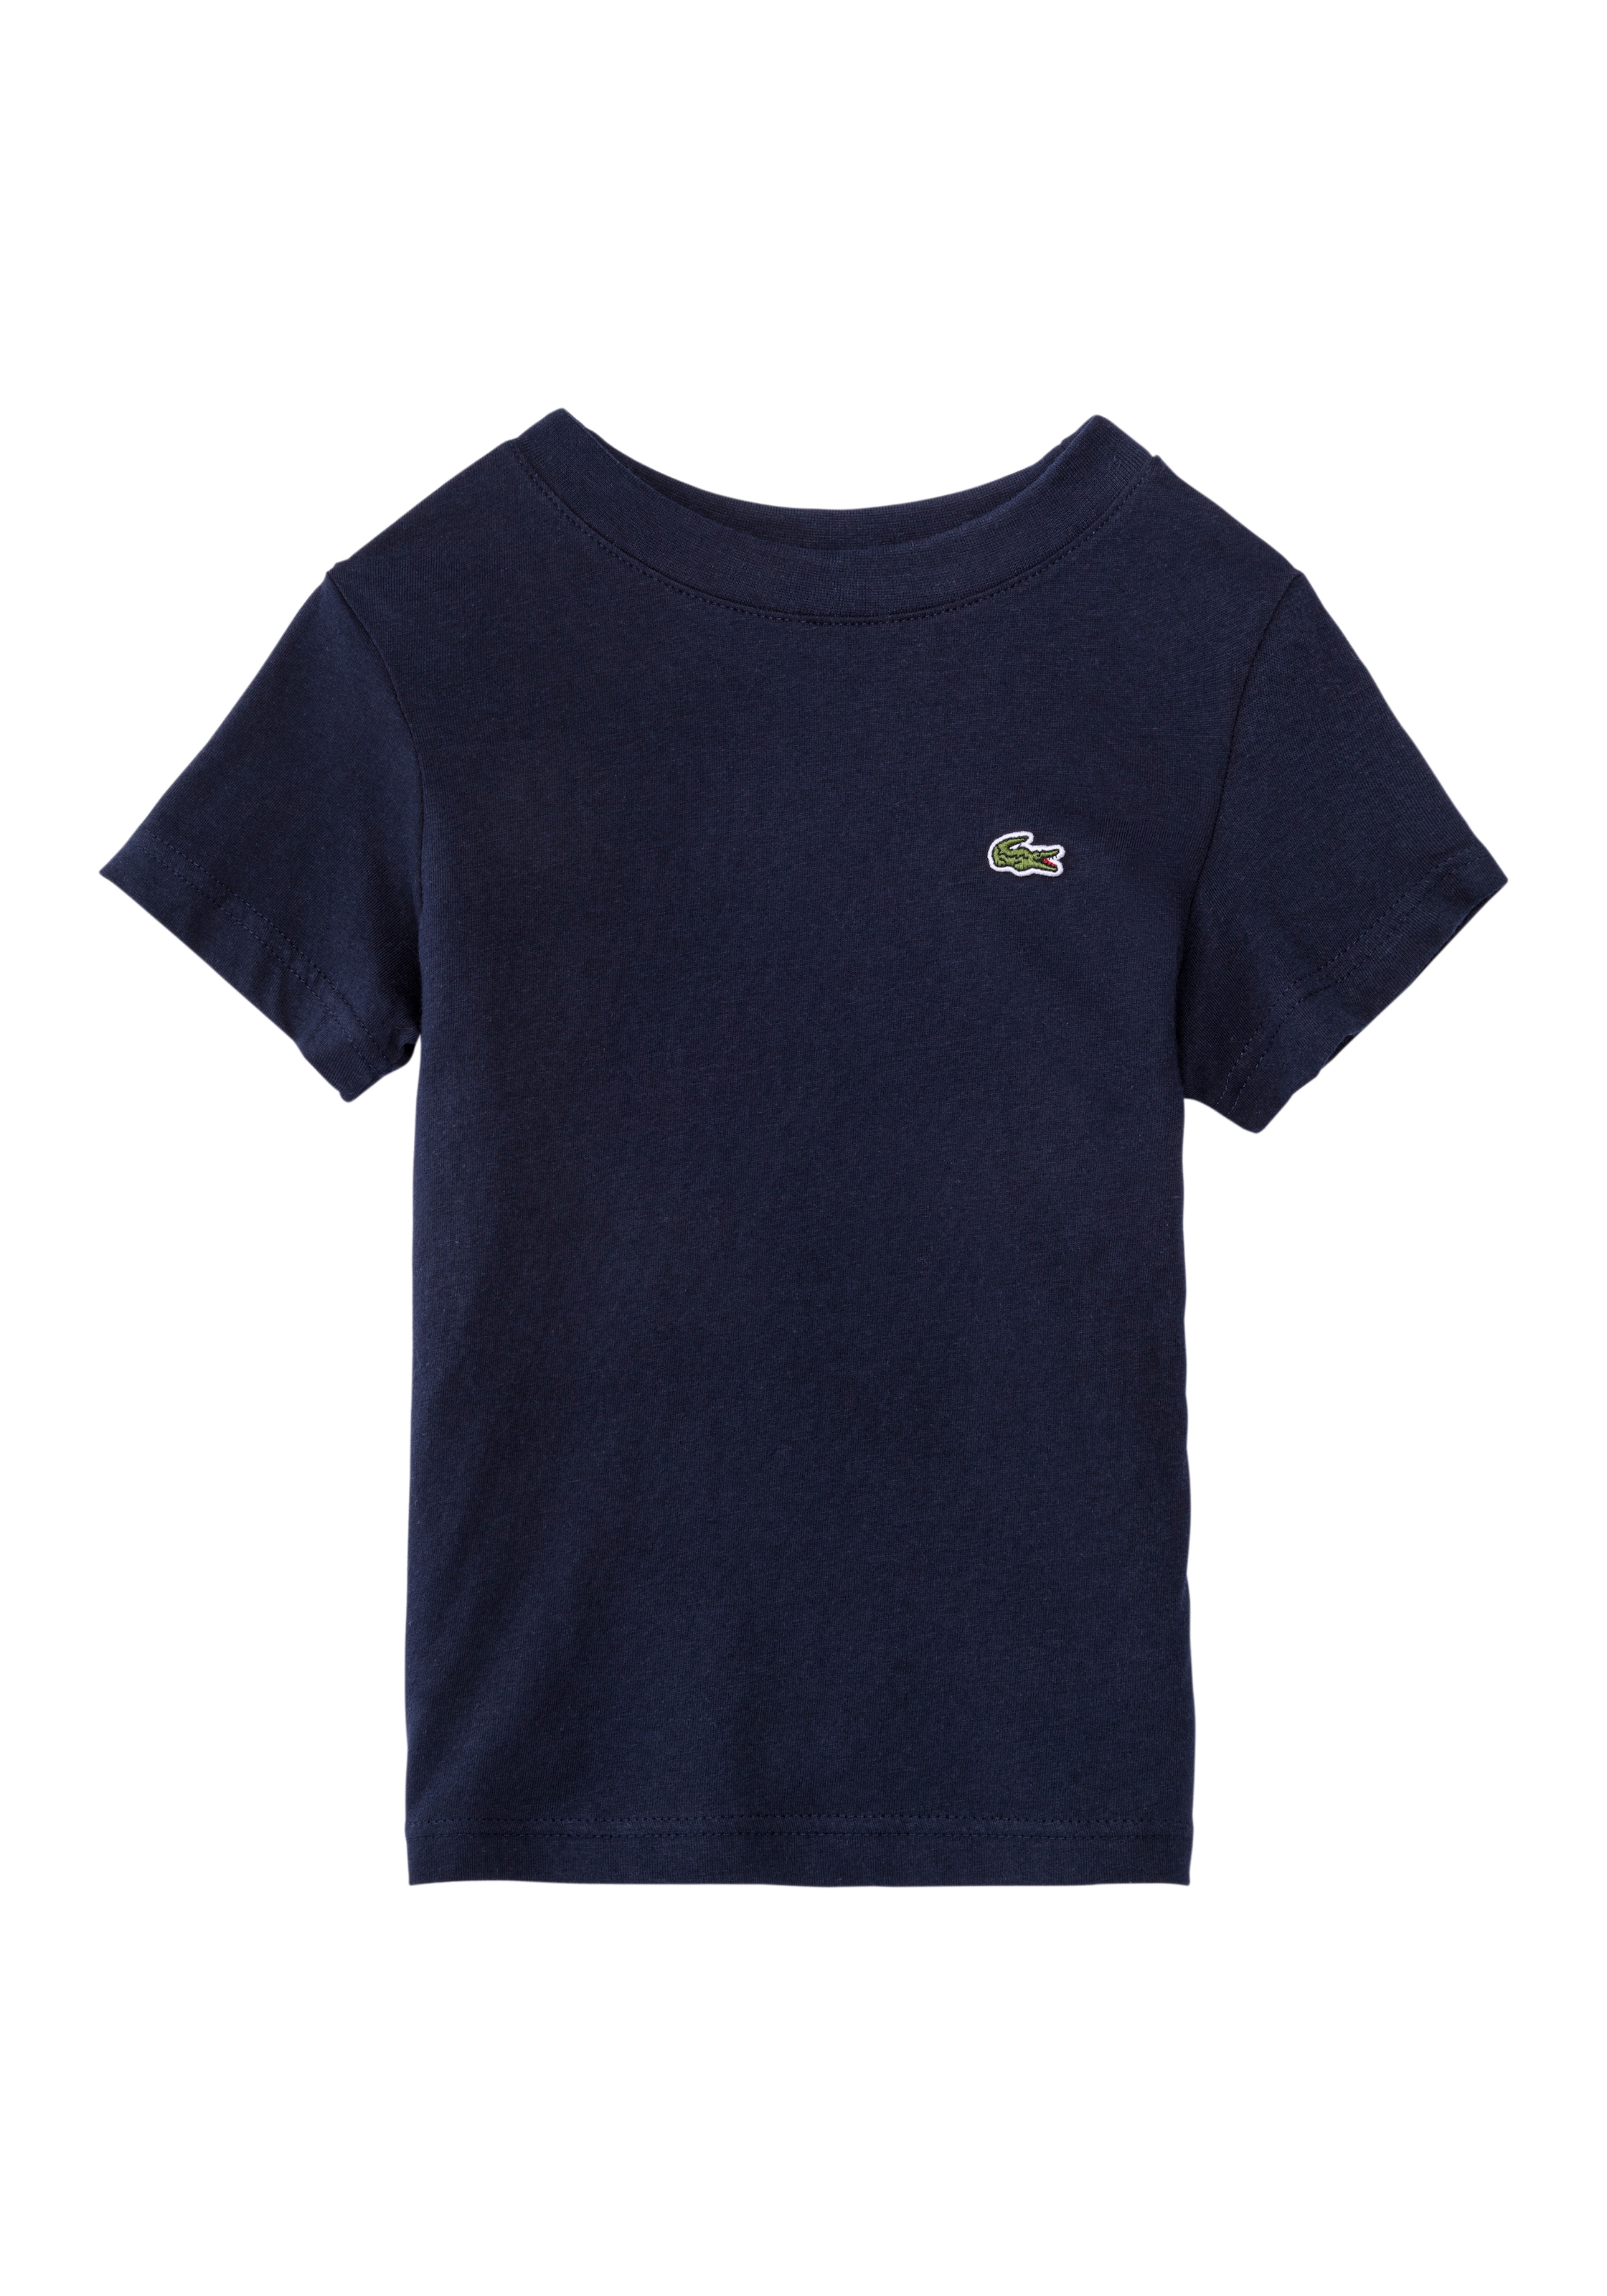 Lacoste T-Shirt, mit Lacoste-Krokodil auf Brusthöhe bei OTTO